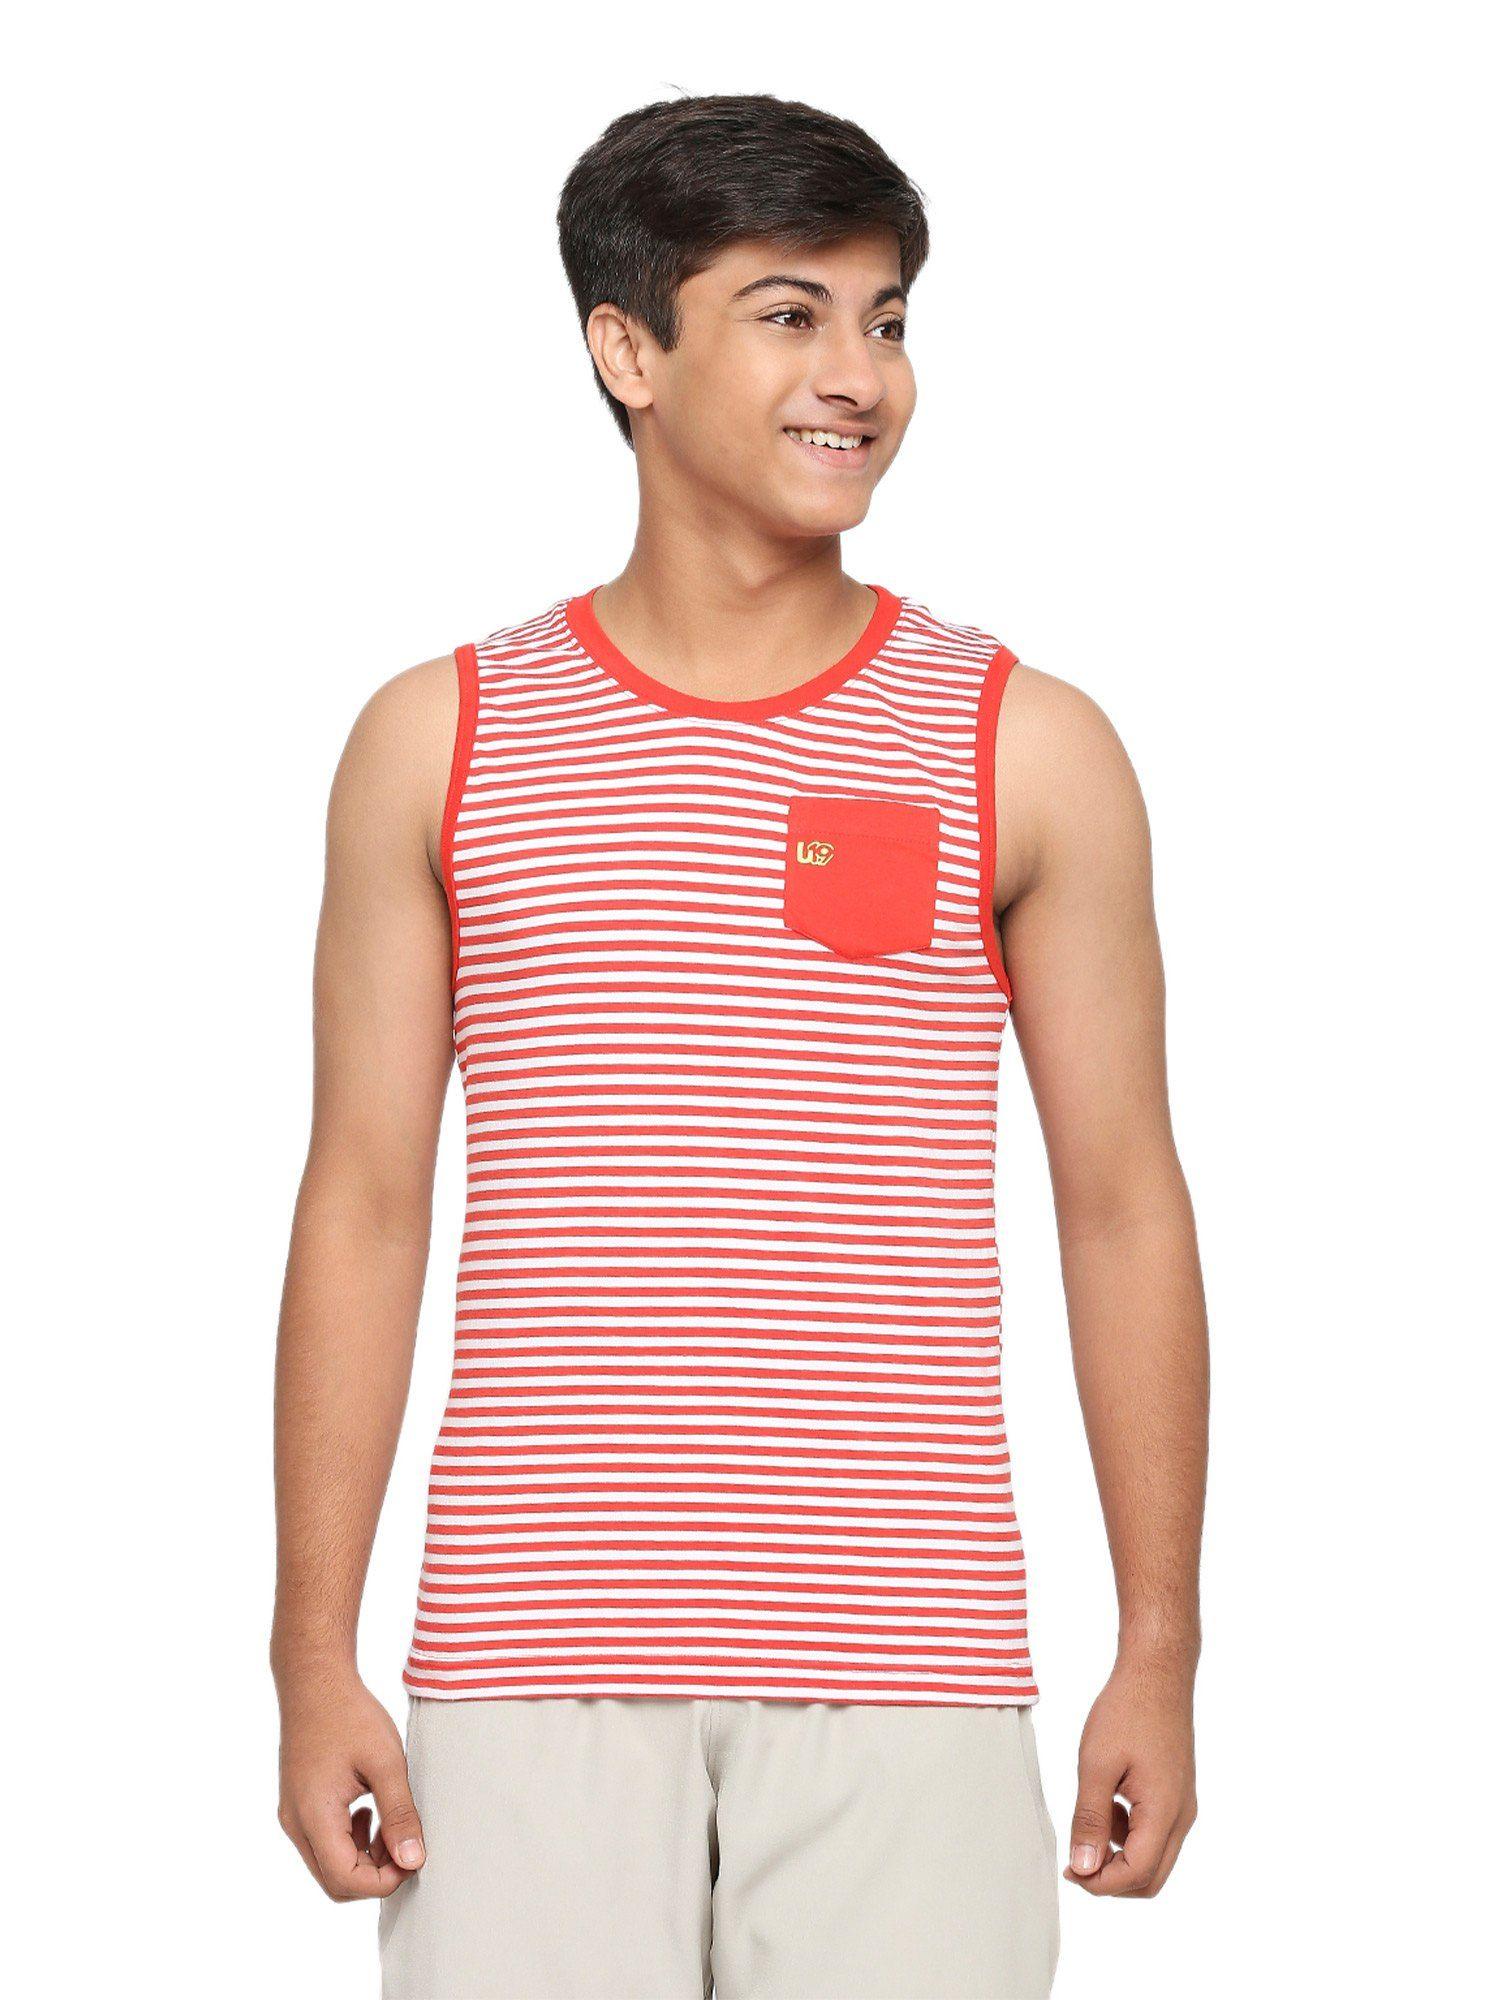 teens-red-striped-vest